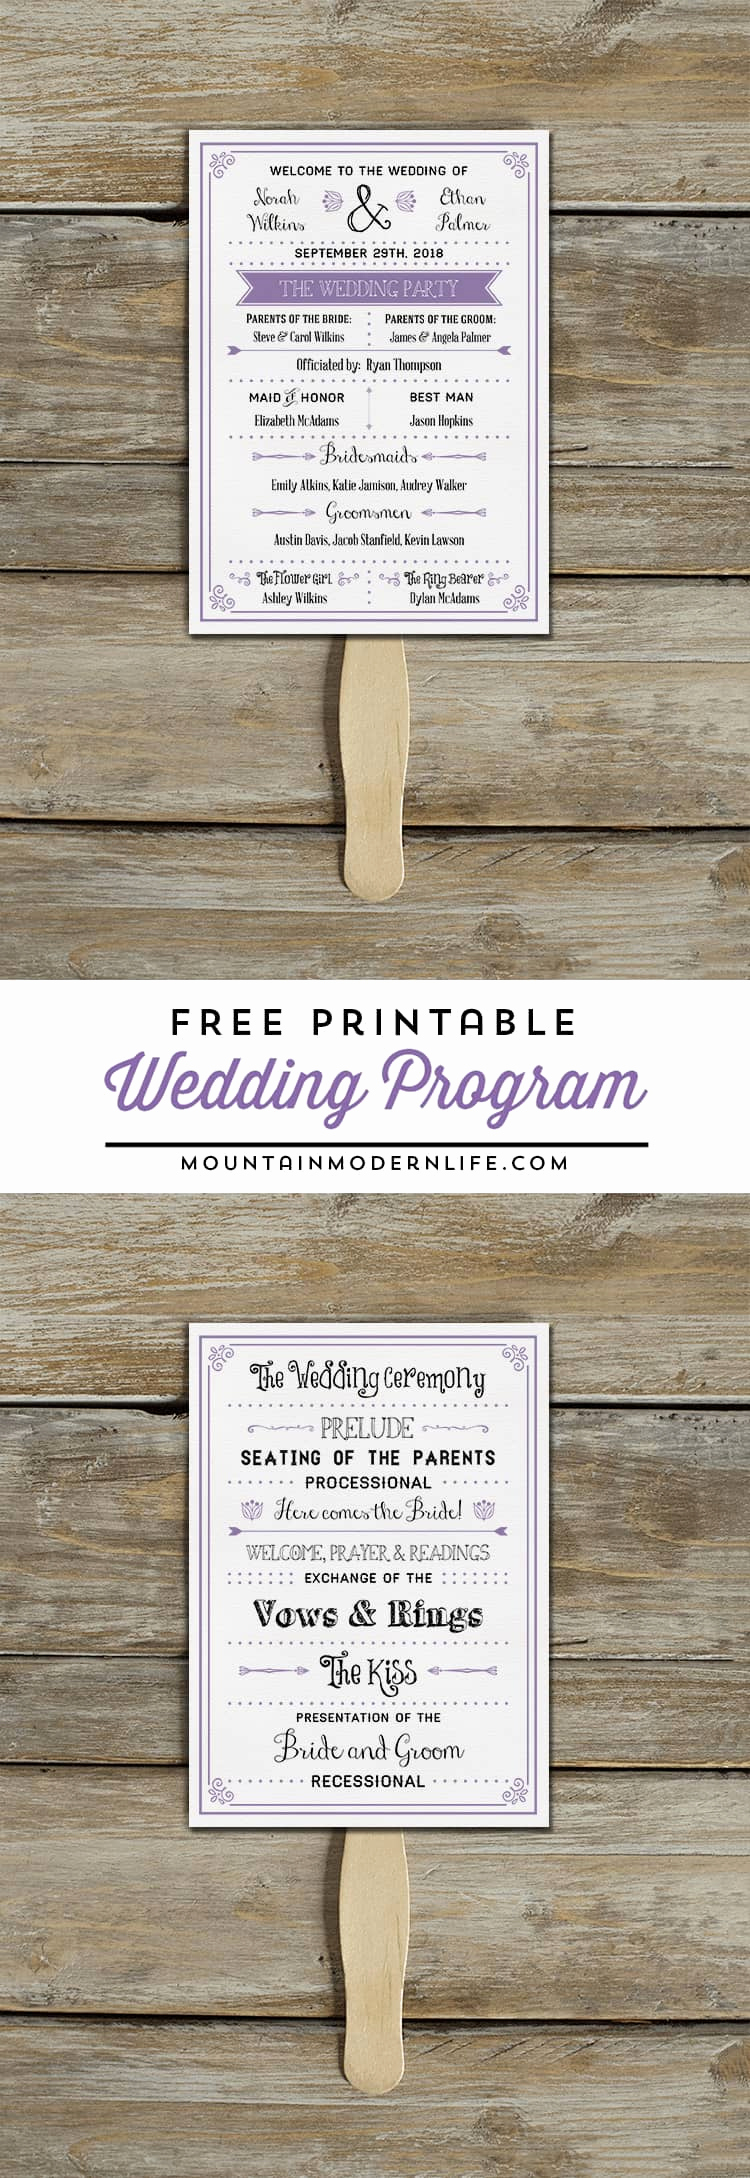 Wedding Program Fans Template Awesome Free Printable Wedding Program